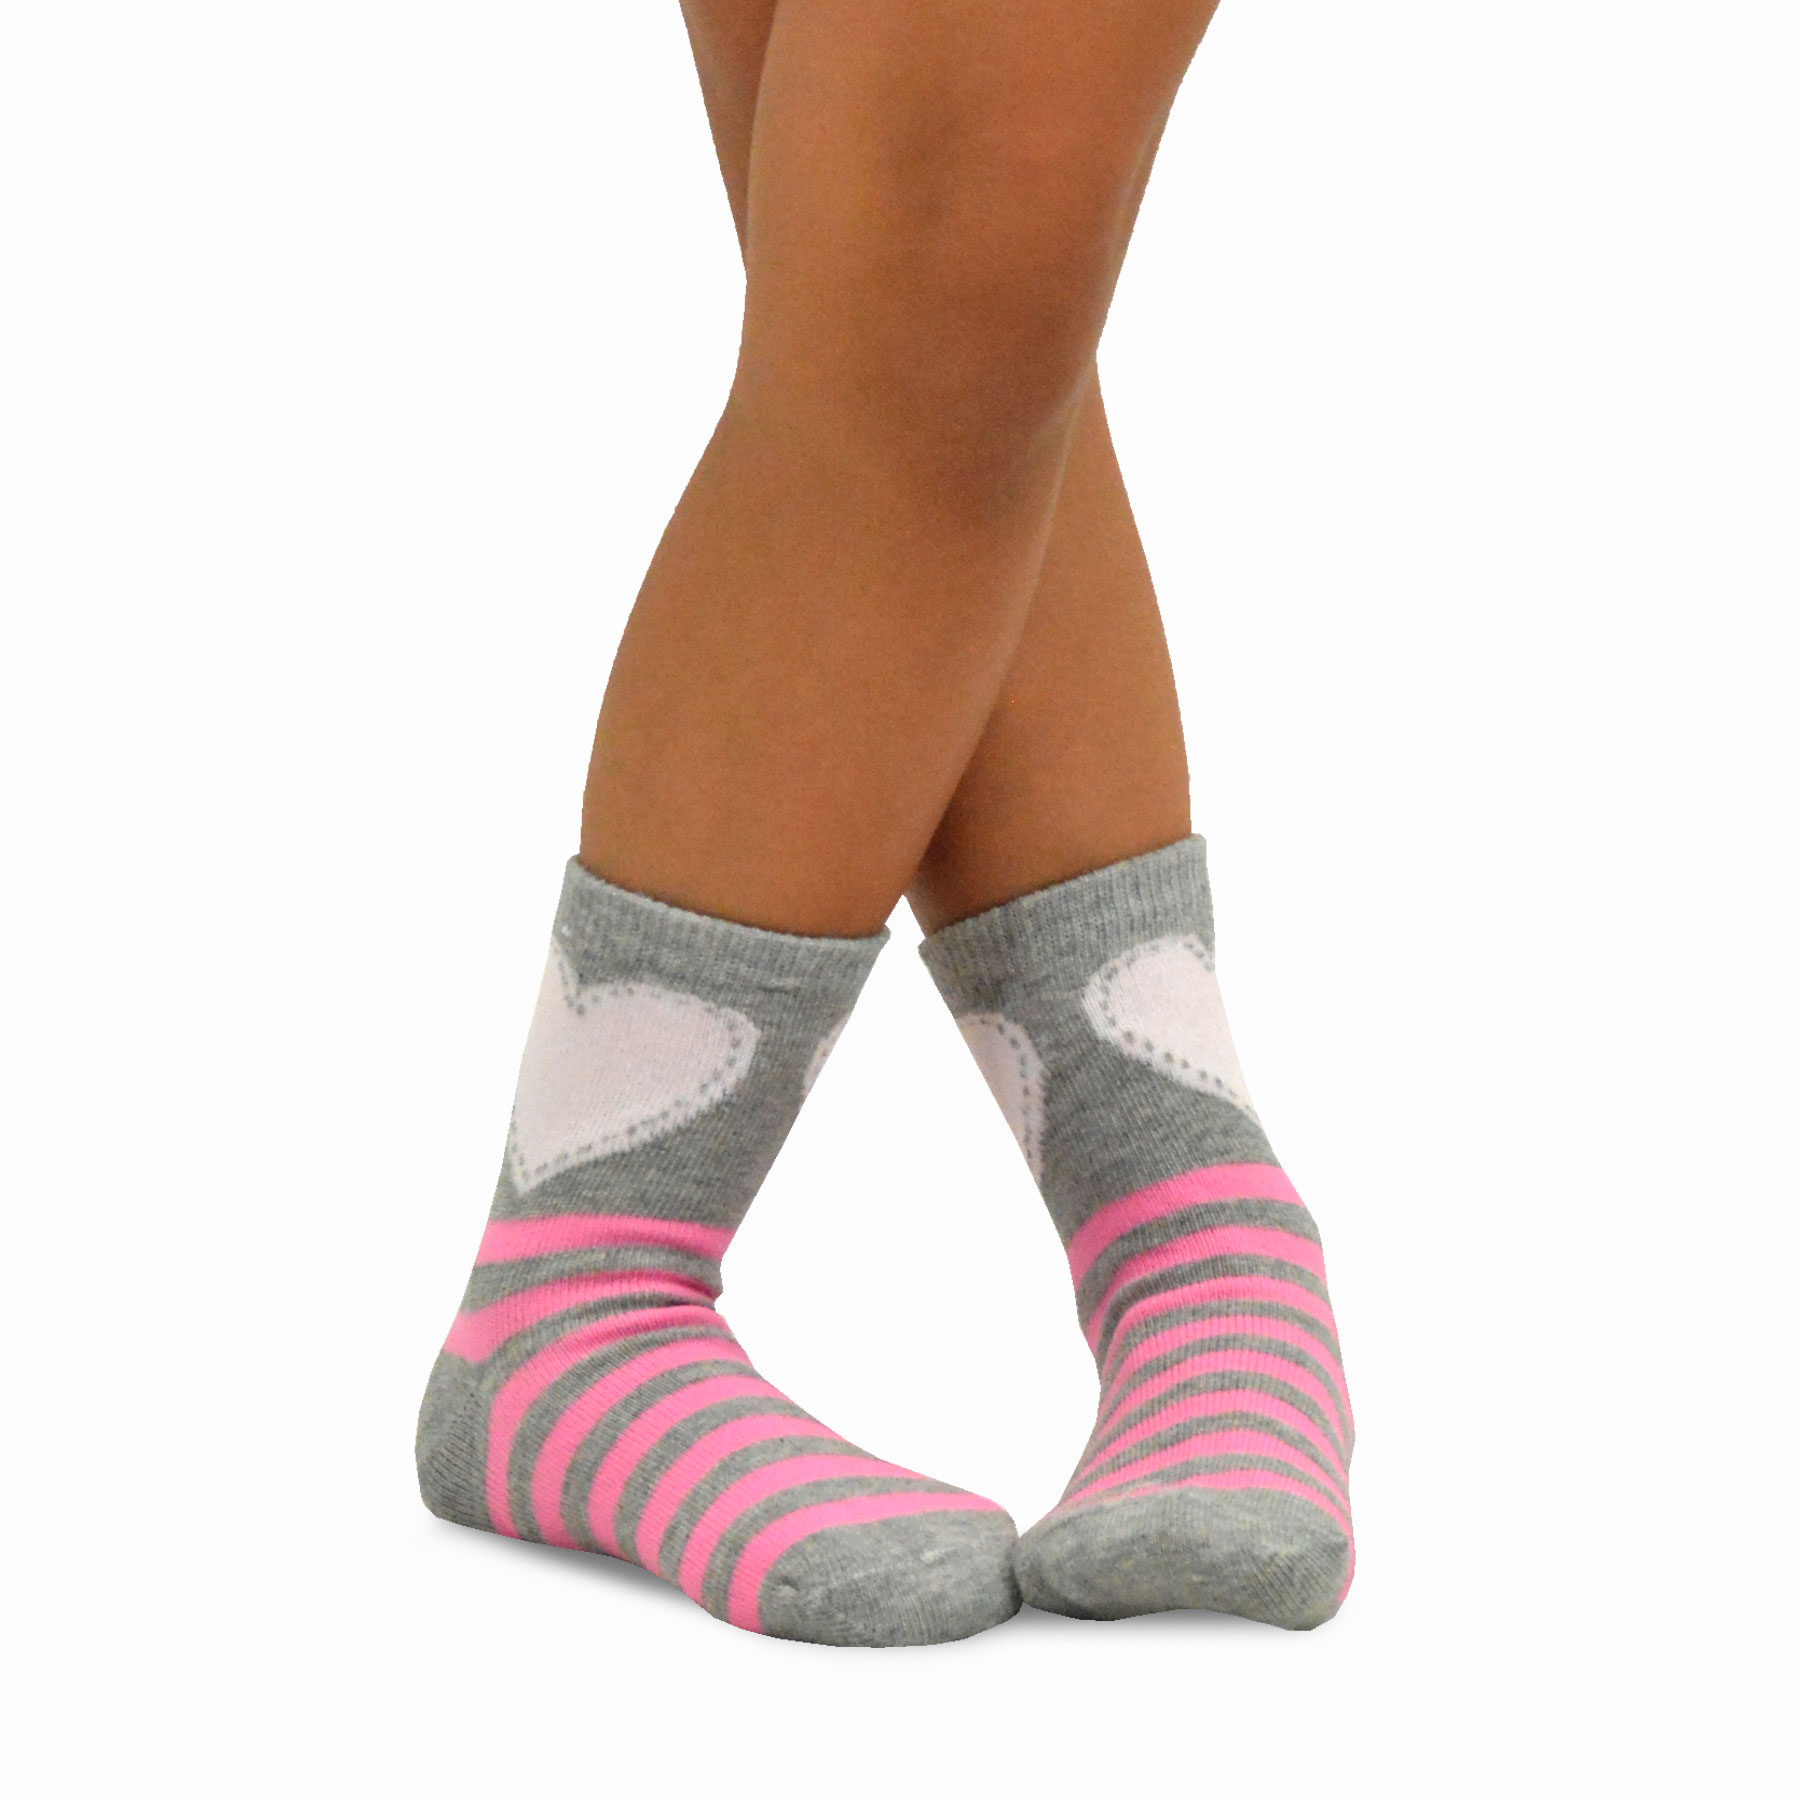 TeeHee Kids Cotton Fashion Crew Socks 6 Pair Pack for Girls - image 5 of 7